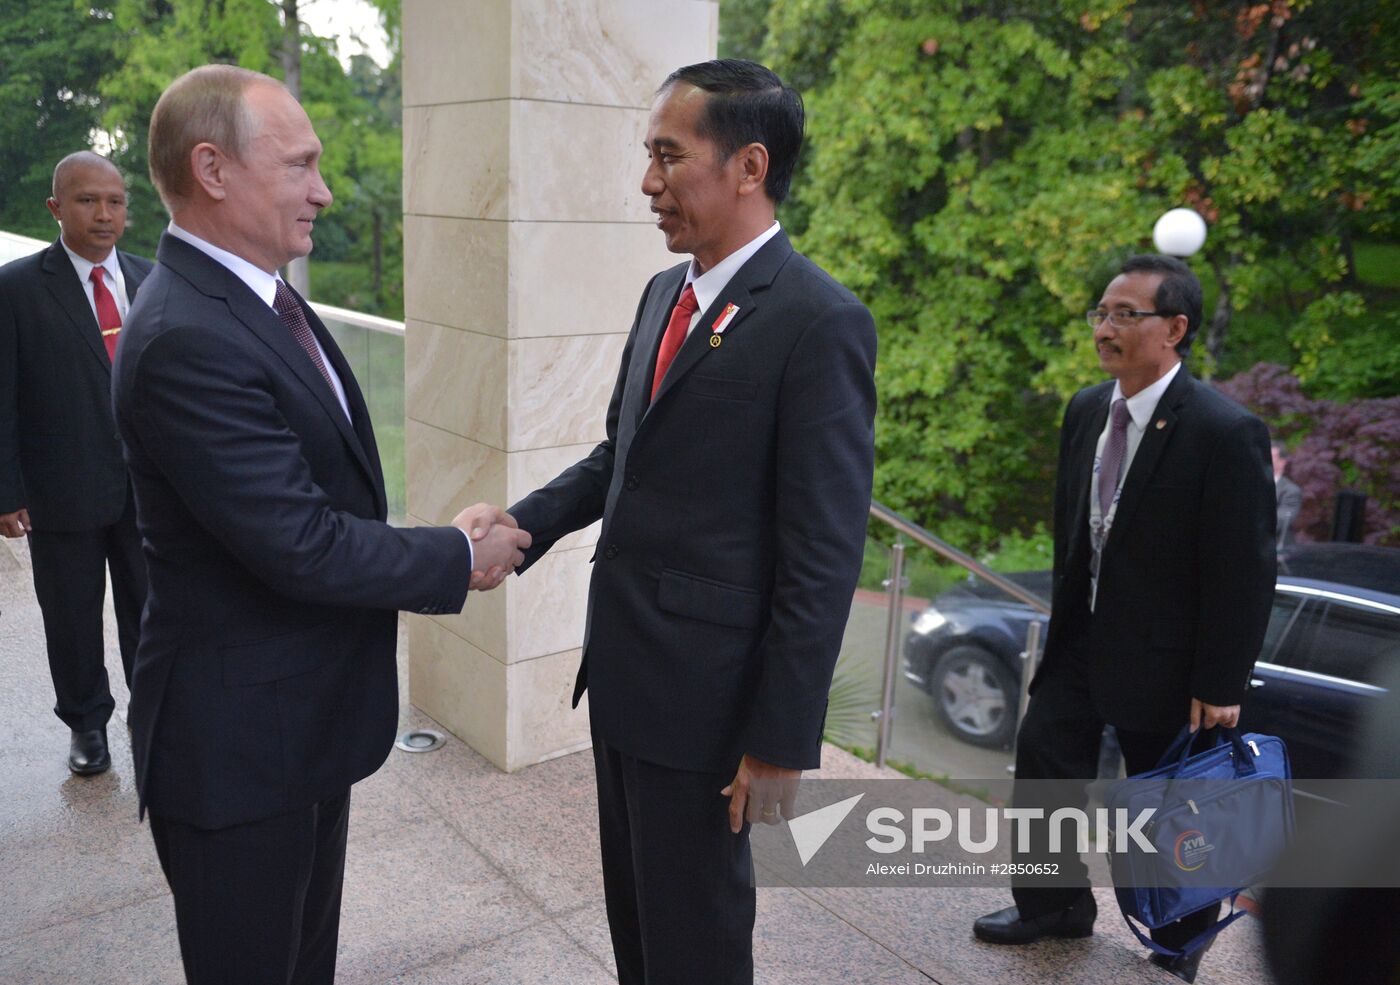 Vladimir Putin meets with President of Indonesia Joko Widodo